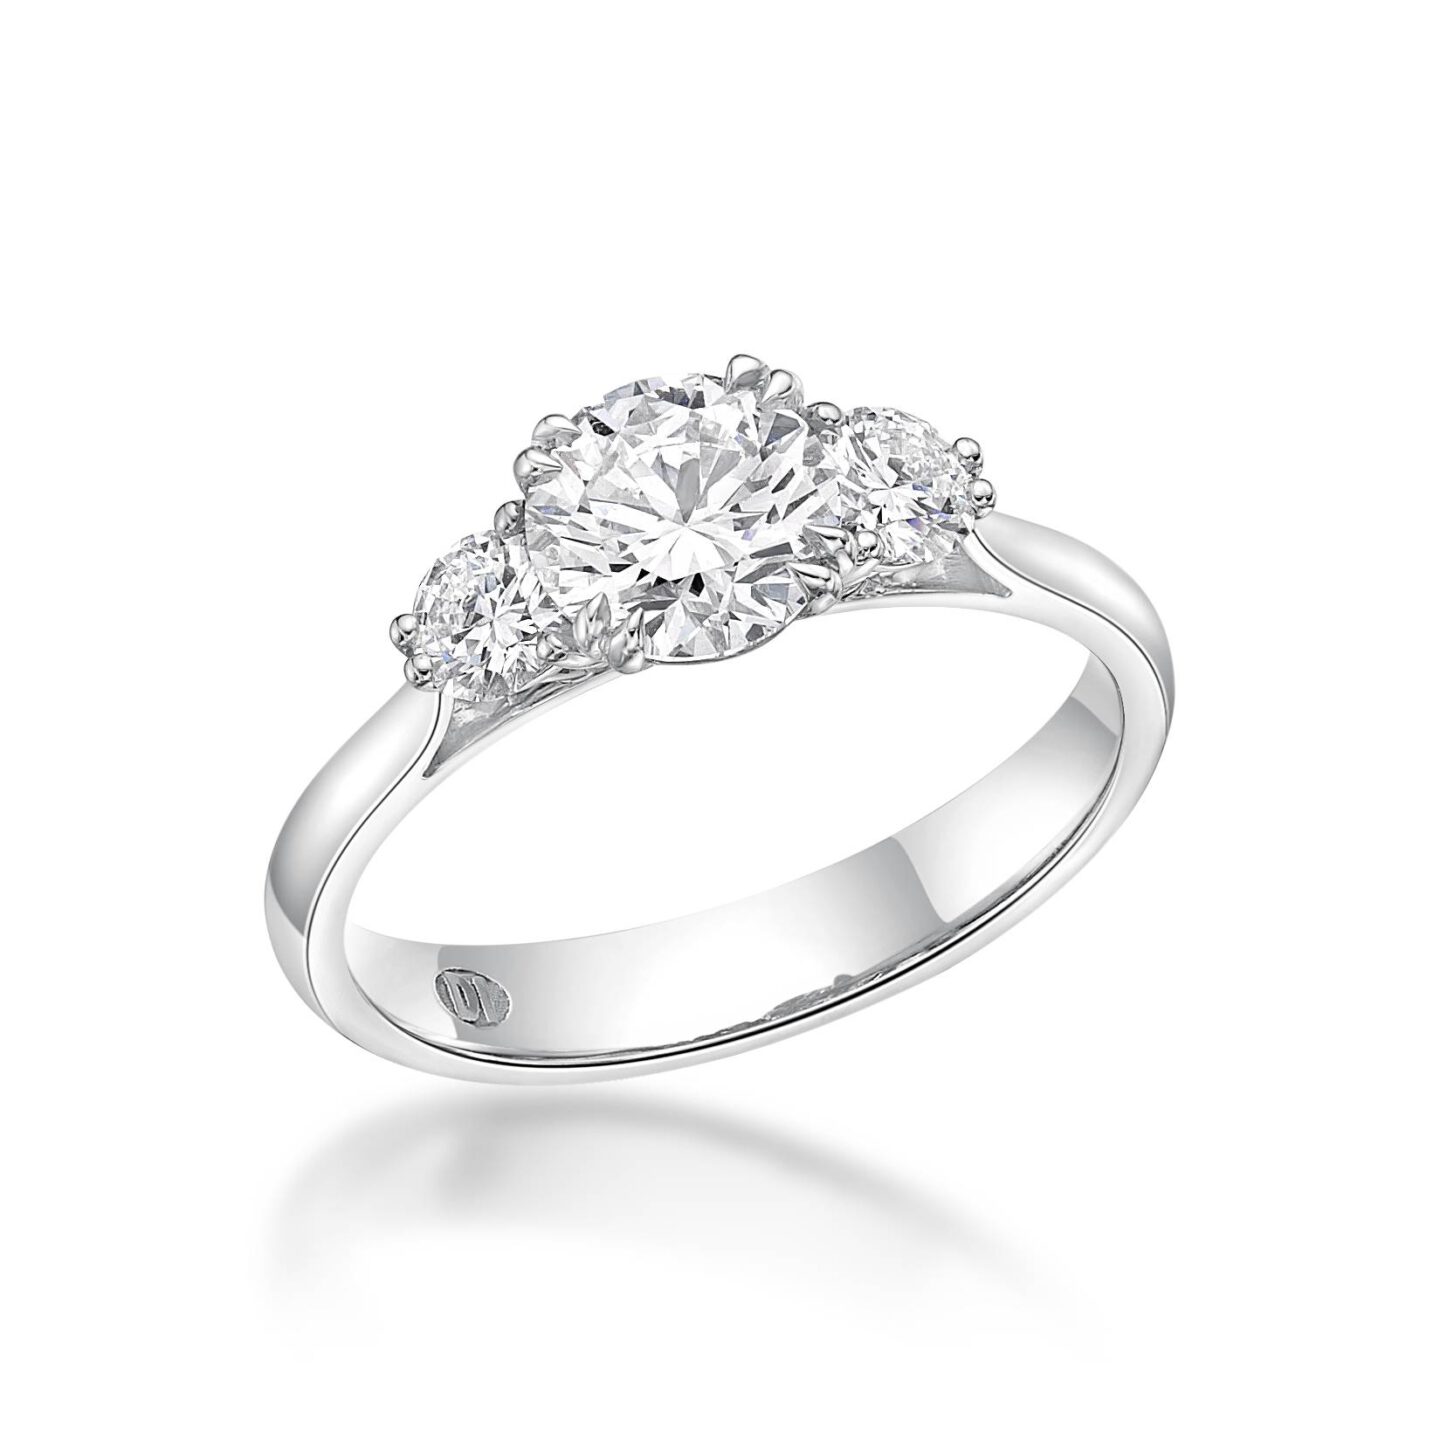 Pallas – Round Brilliant Cut Diamond Trilogy Engagement Ring